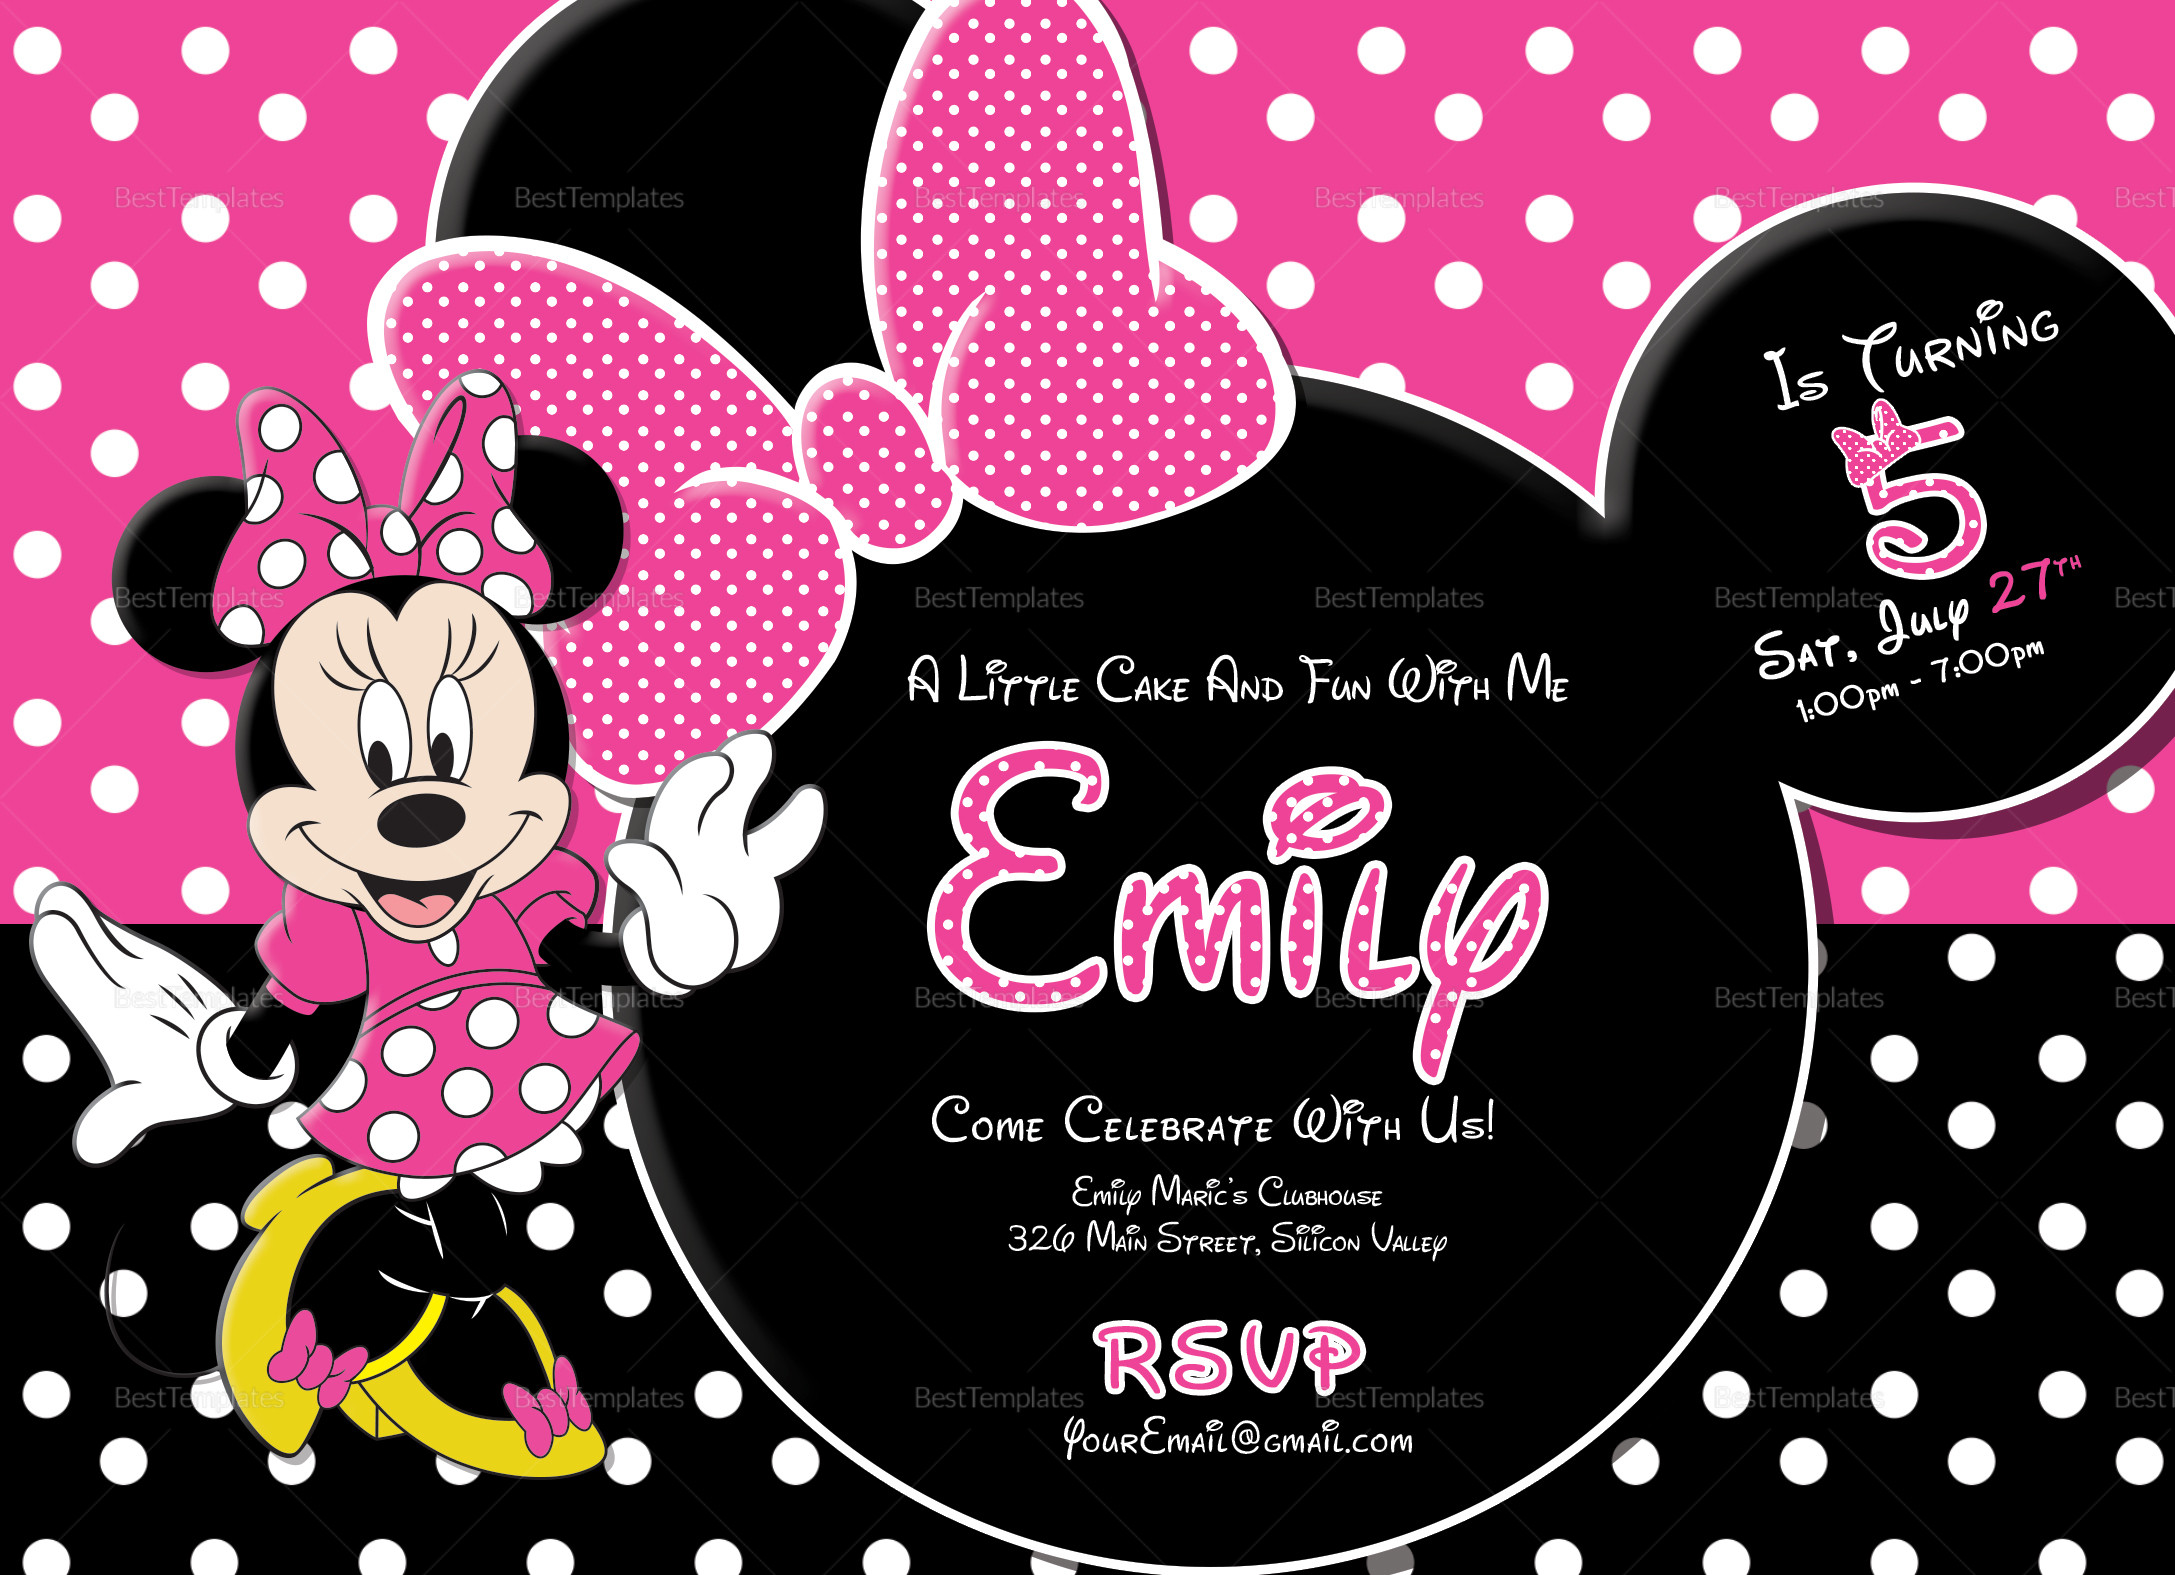 Minnie Mouse Birthday Invitations Templates
 Special Minnie Mouse Birthday Invitation Design Template